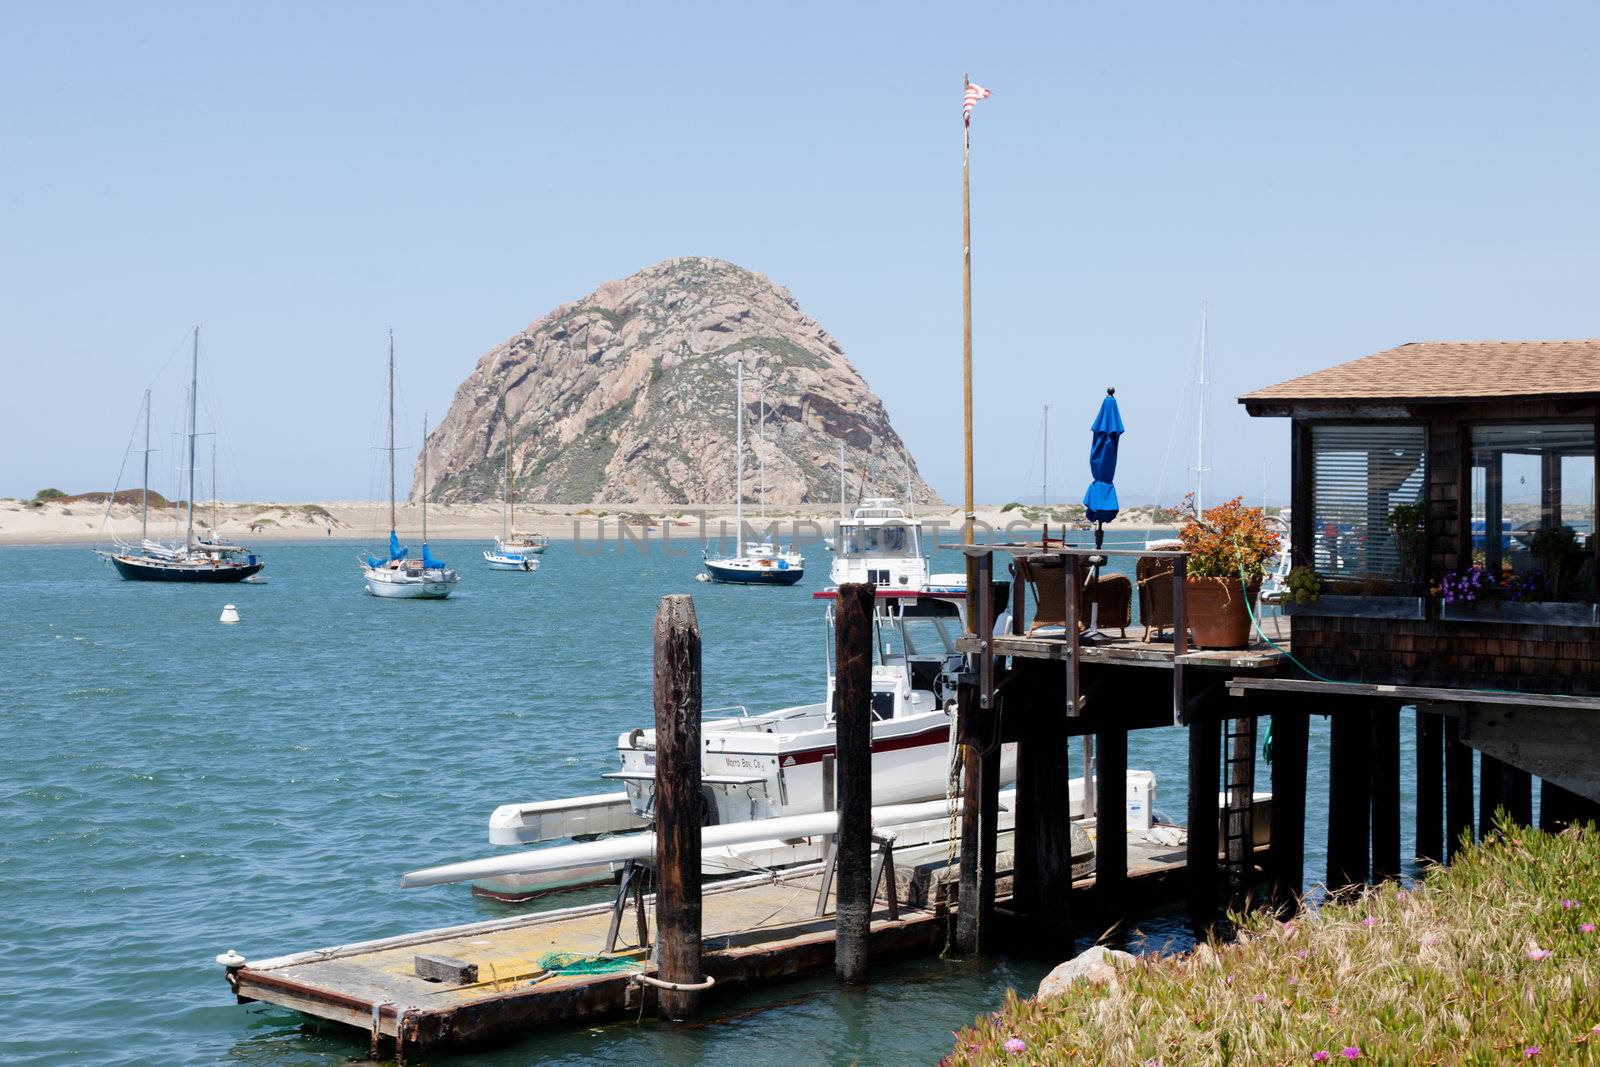 Morro Bay is a waterfront city in San Luis Obispo County, California,